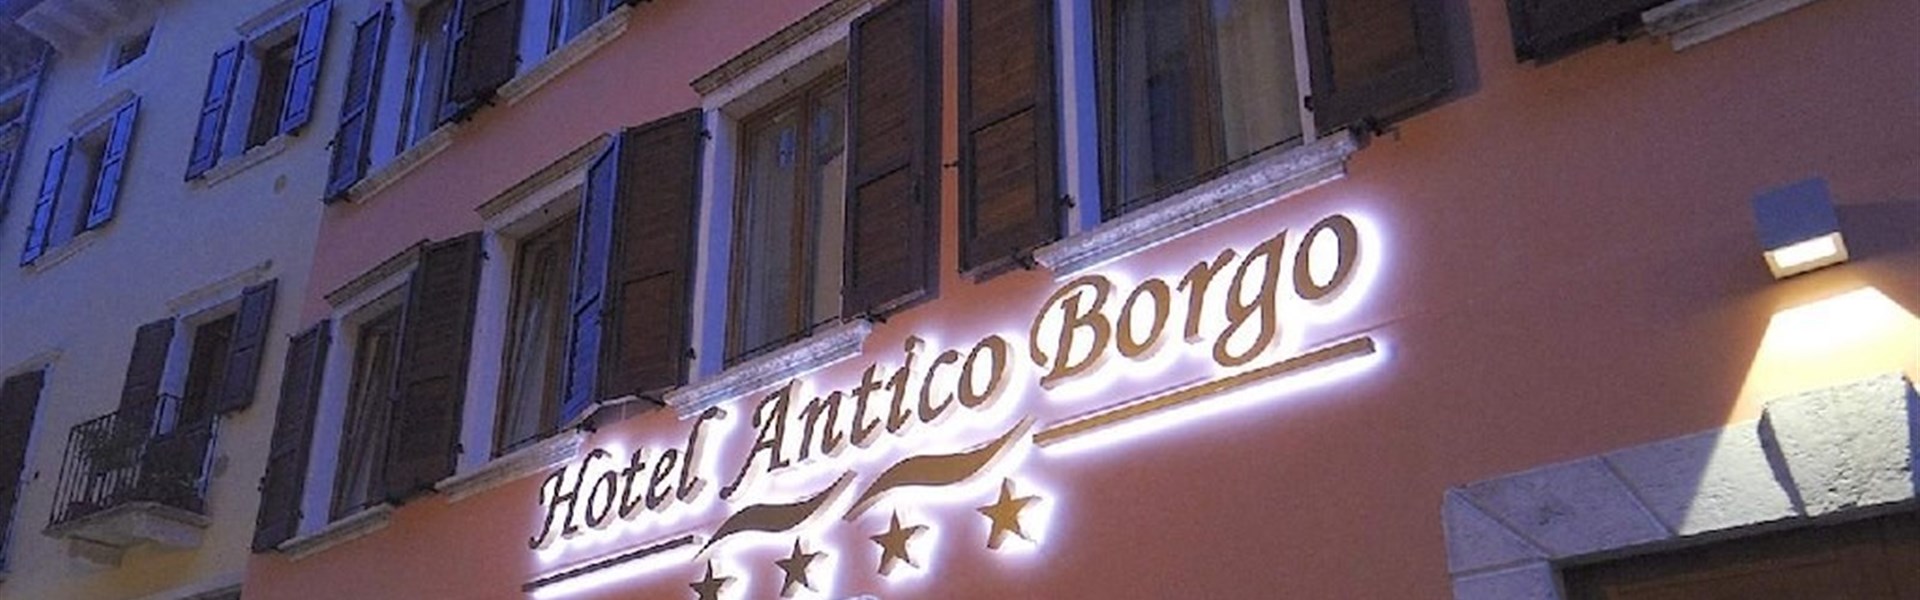 Hotel Antico Borgo - 